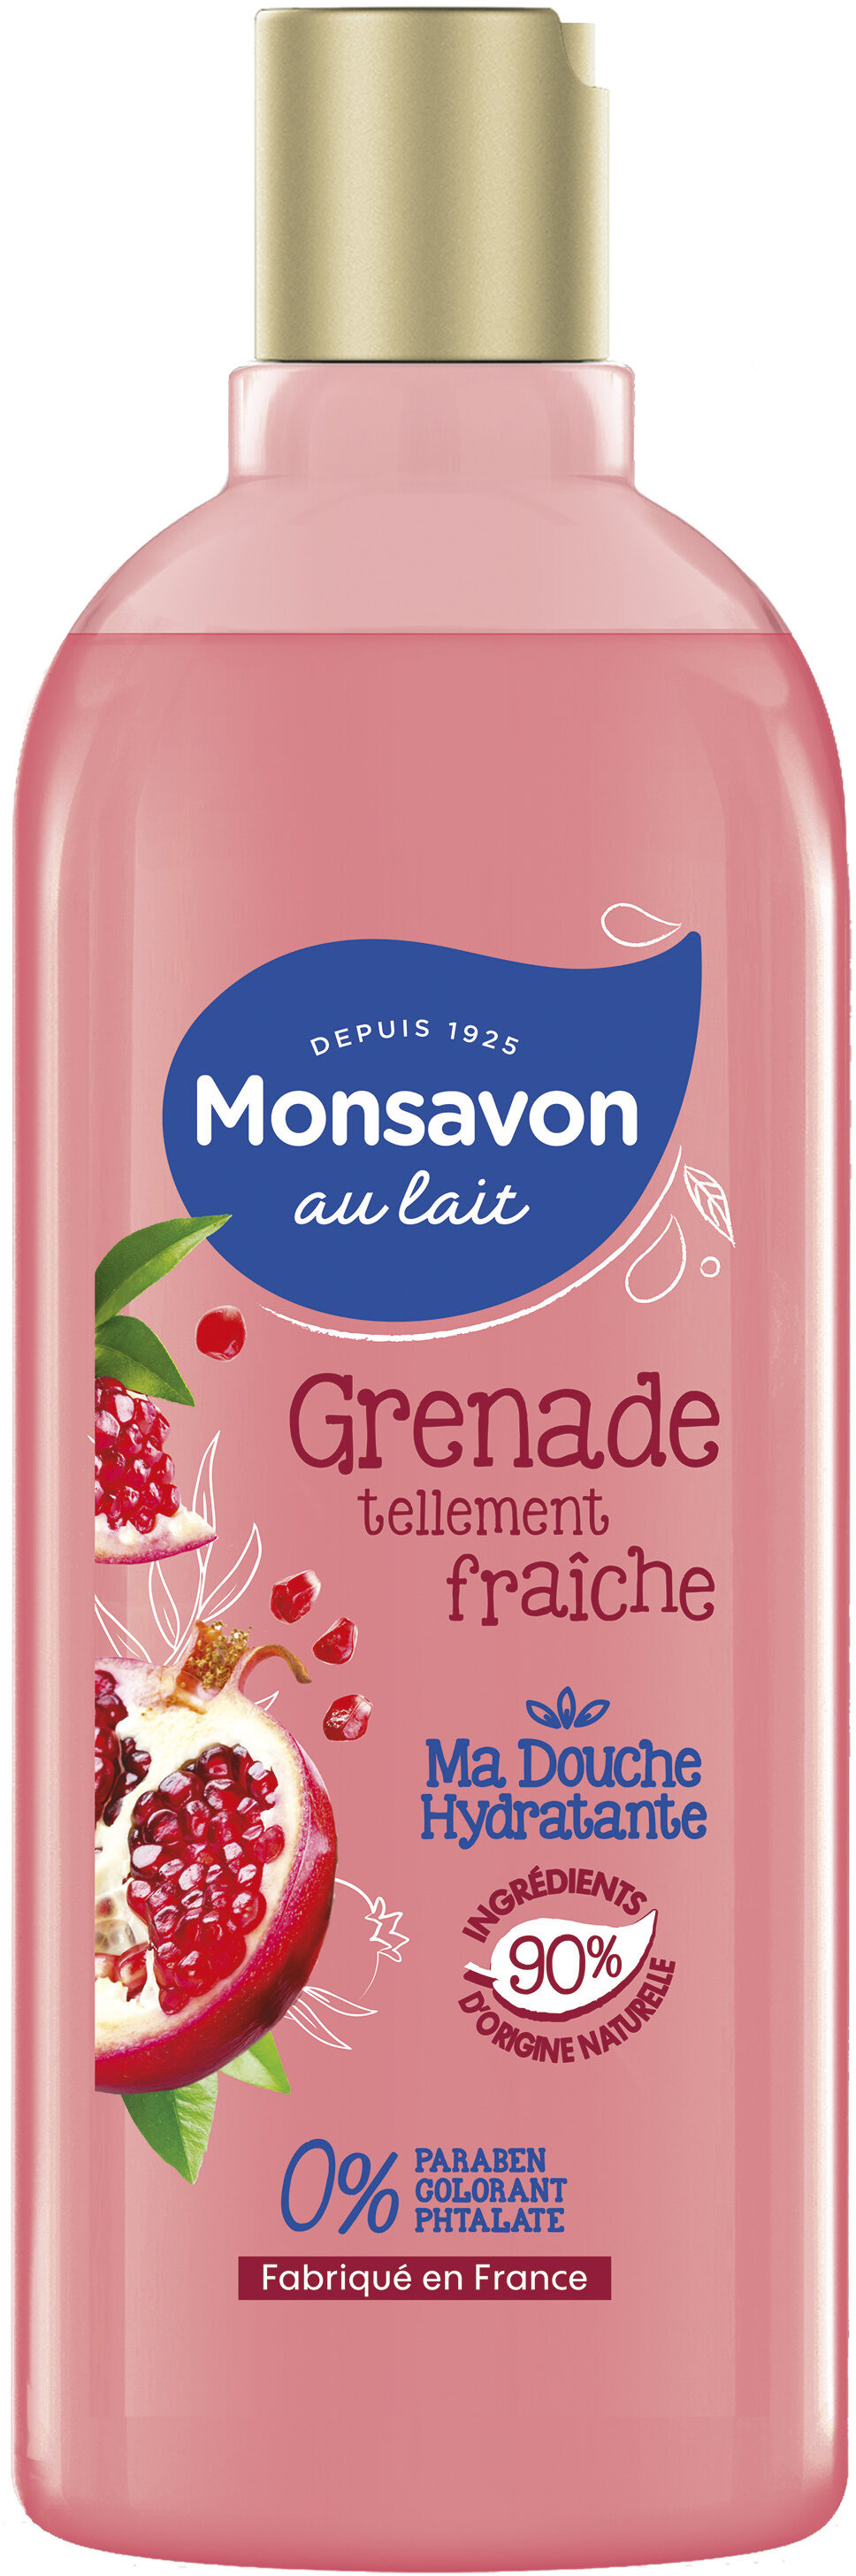 Monsavon Gel Douche Grenade Tellement Fraîche - Produit - fr